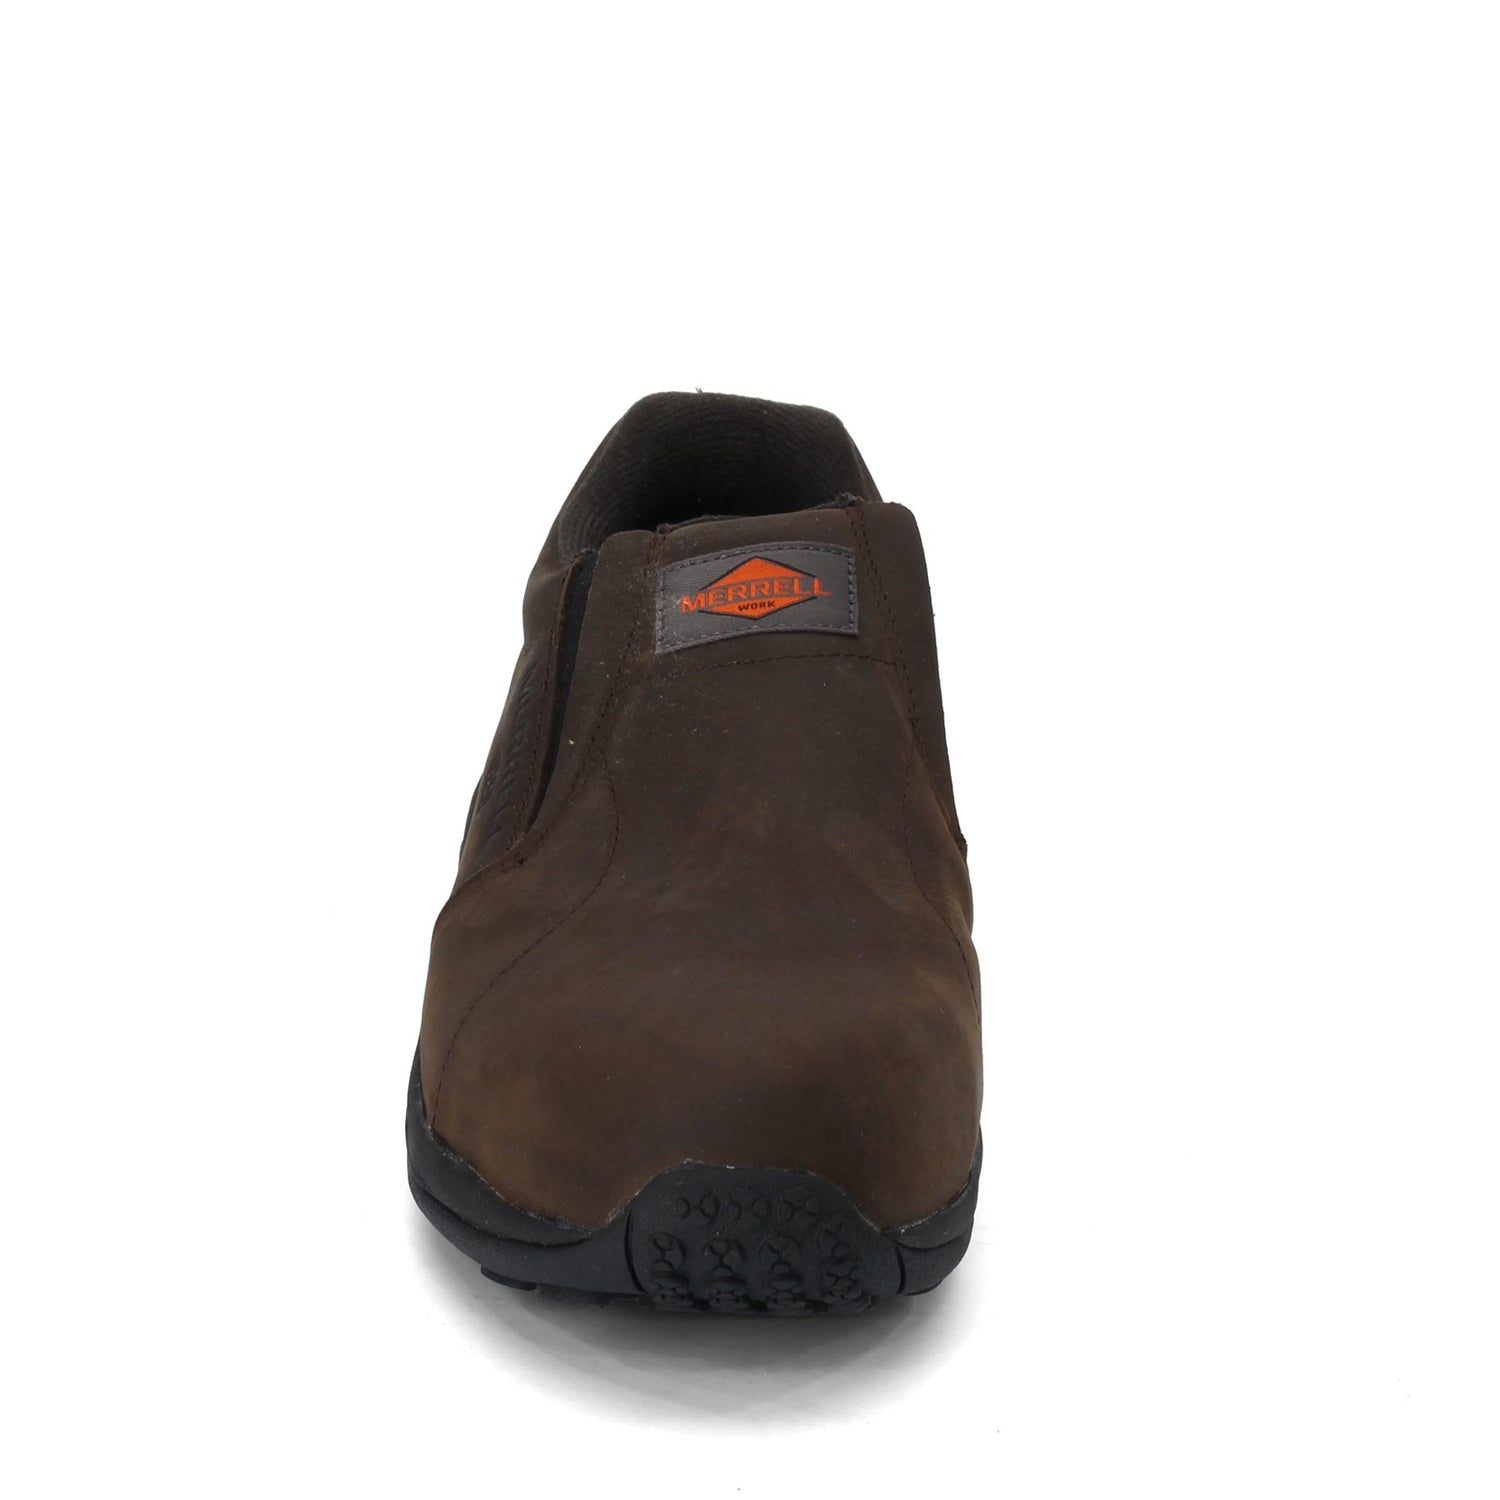 Peltz Shoes  Men's Merrell Jungle Moc Comp Toe Work Shoe - Wide Width Espresso J099381W